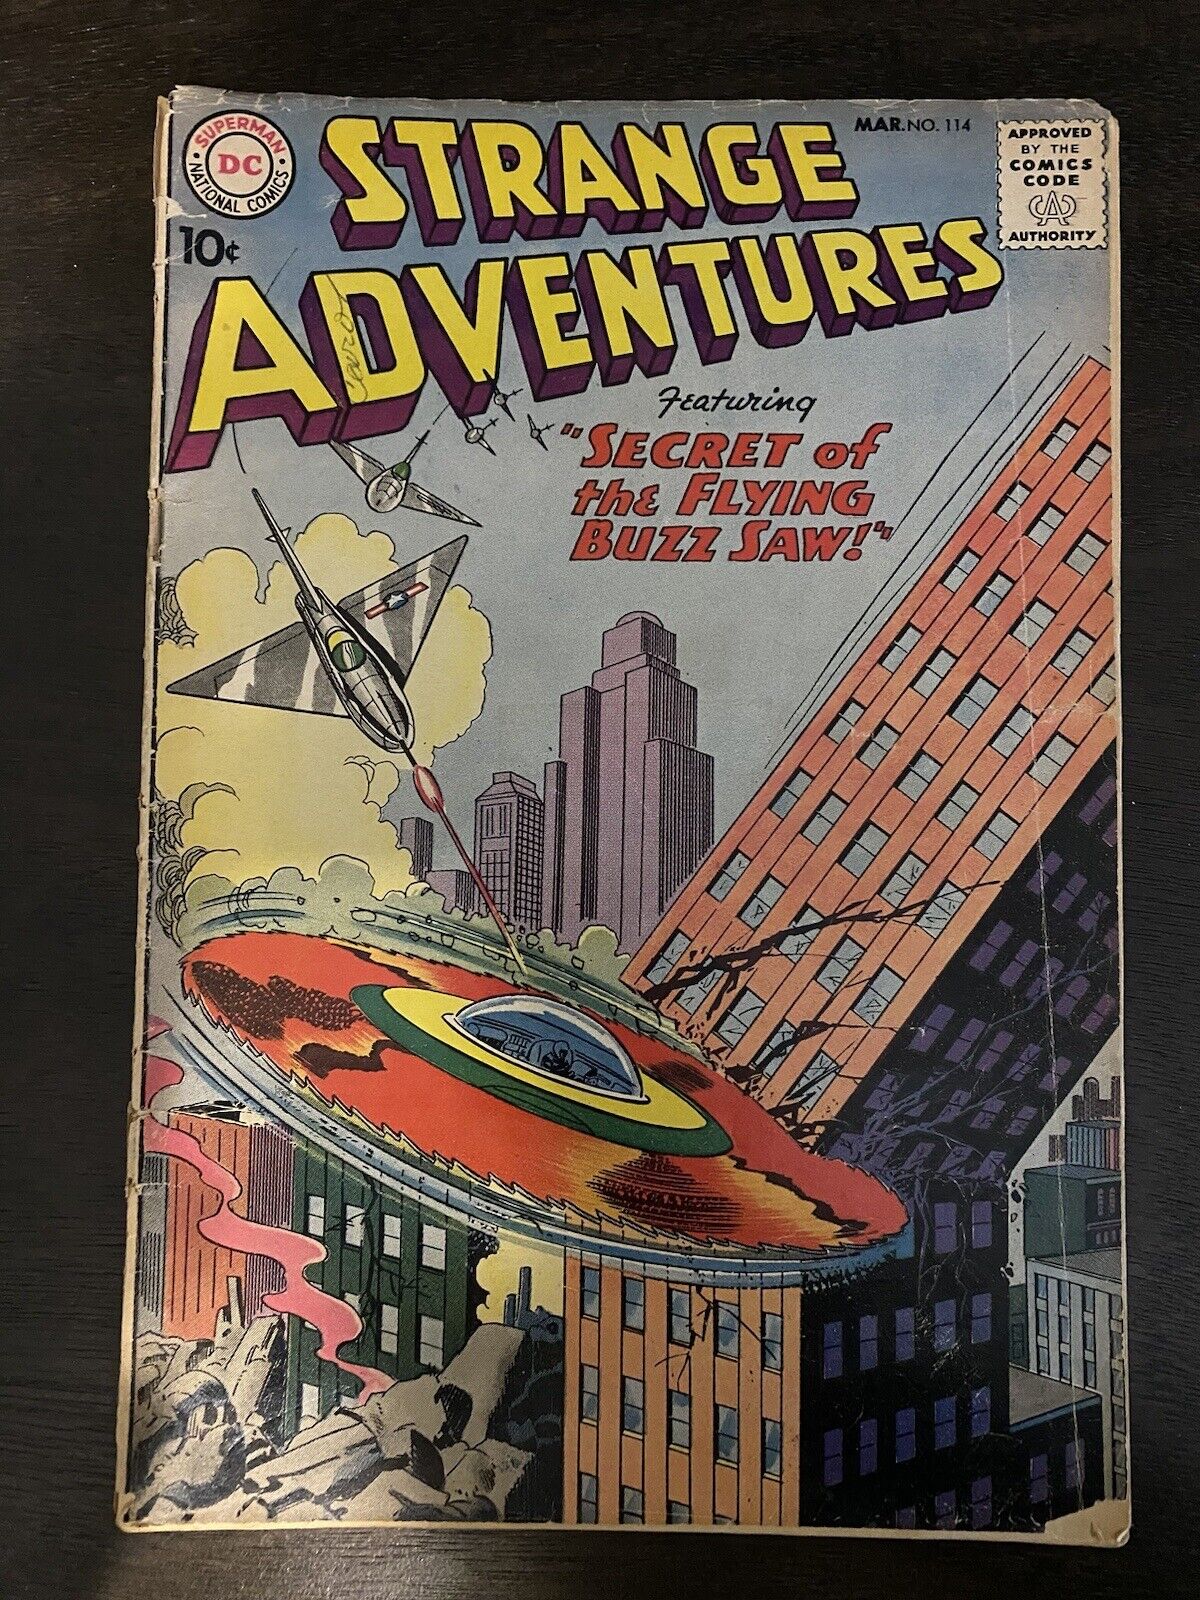 STRANGE ADVENTURES #114 / GIL KANE COVER DC COMICS 1960